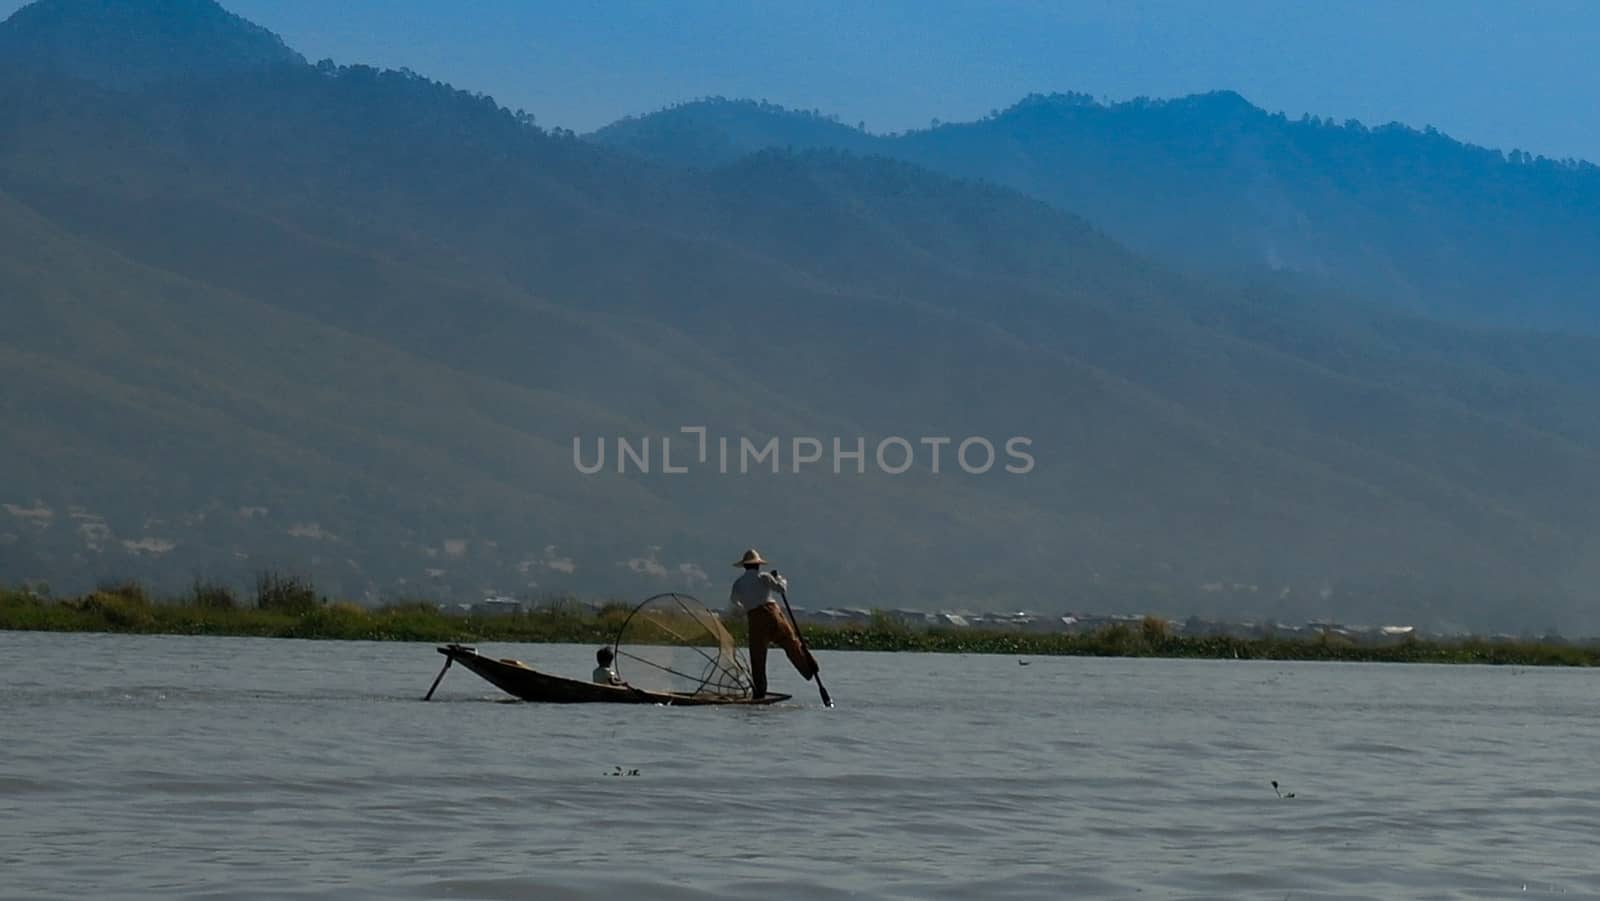 Fisherman on the boat at the sunrise, Inle lake, Myanmar